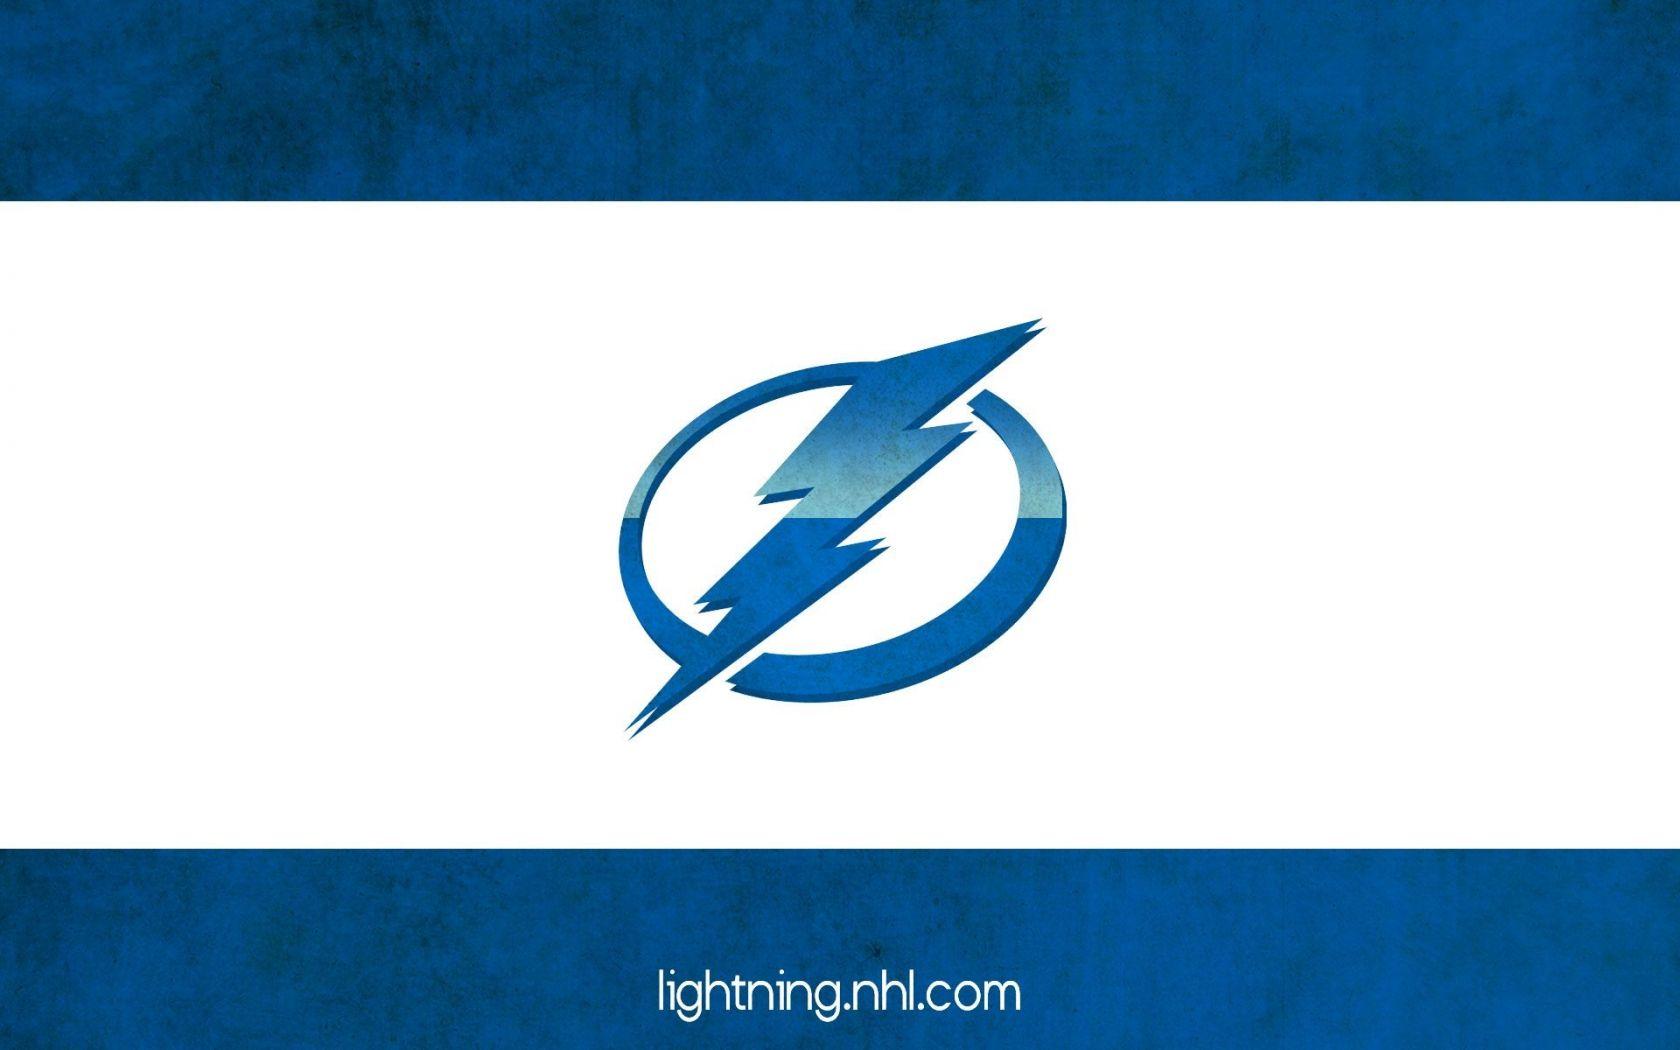 Be the Thunder - Tampa Bay Lightning Wallpaper (30398471) - Fanpop